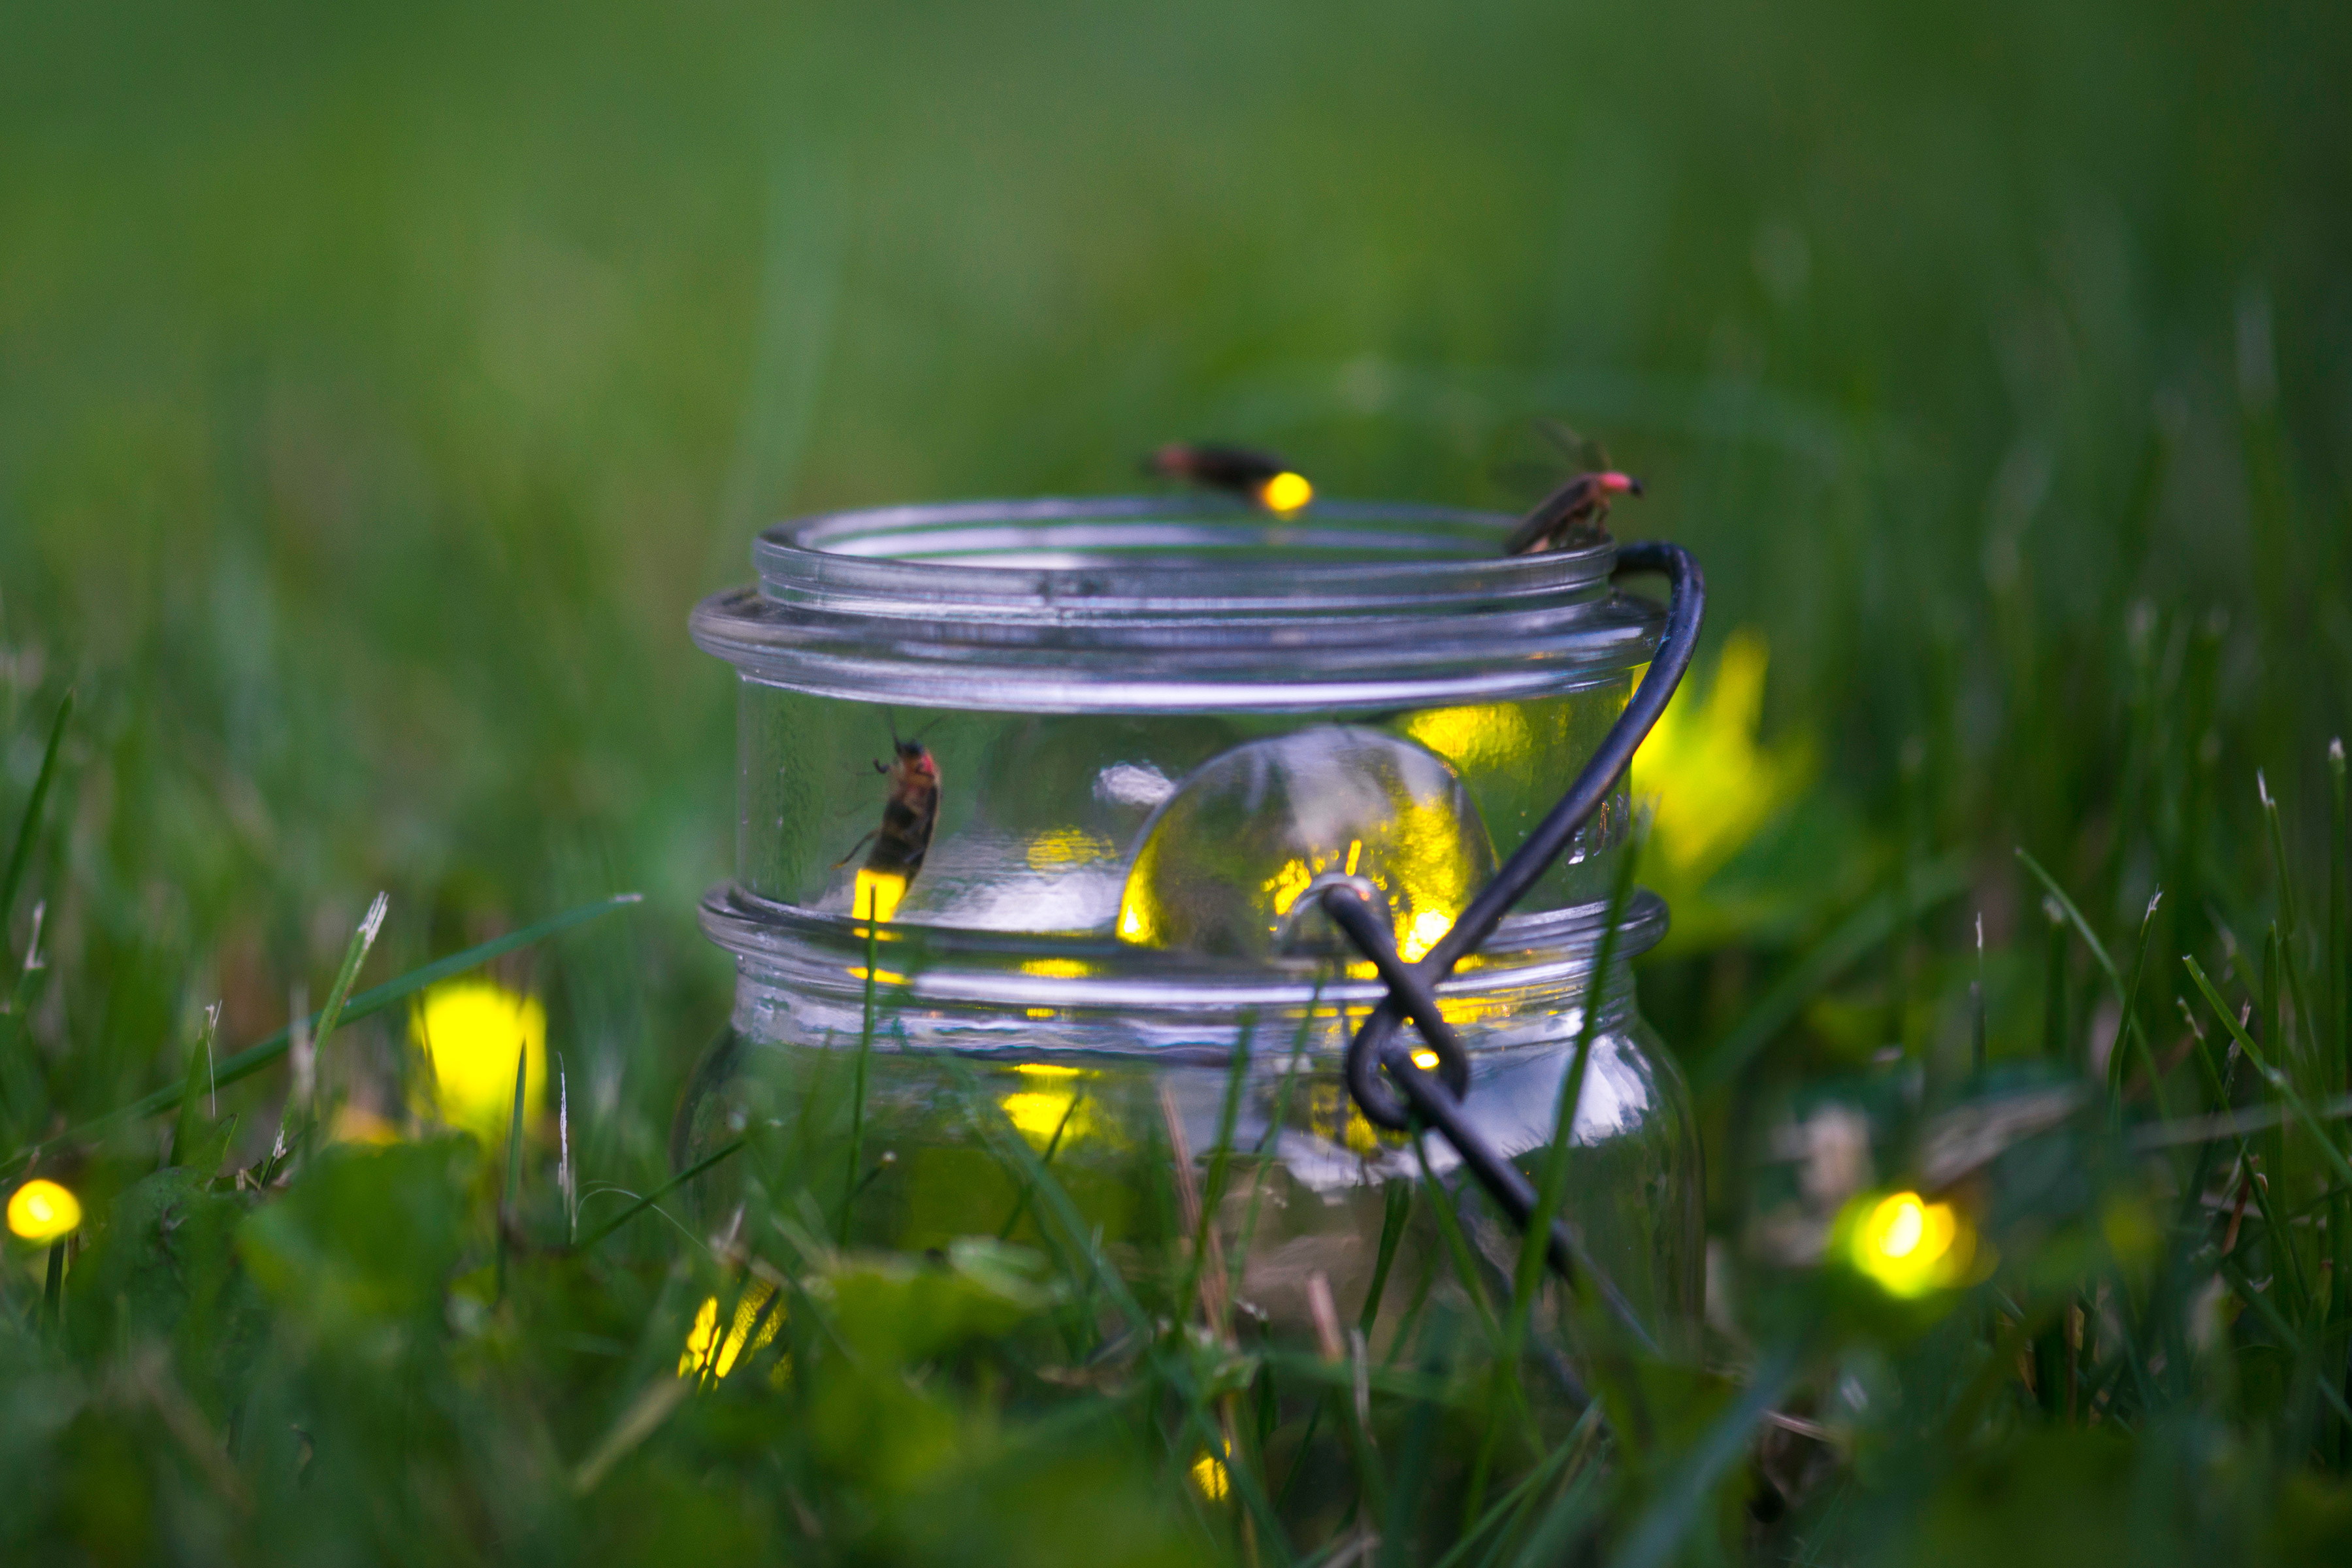 Fireflies around a glass jar, sitting in a lawn.